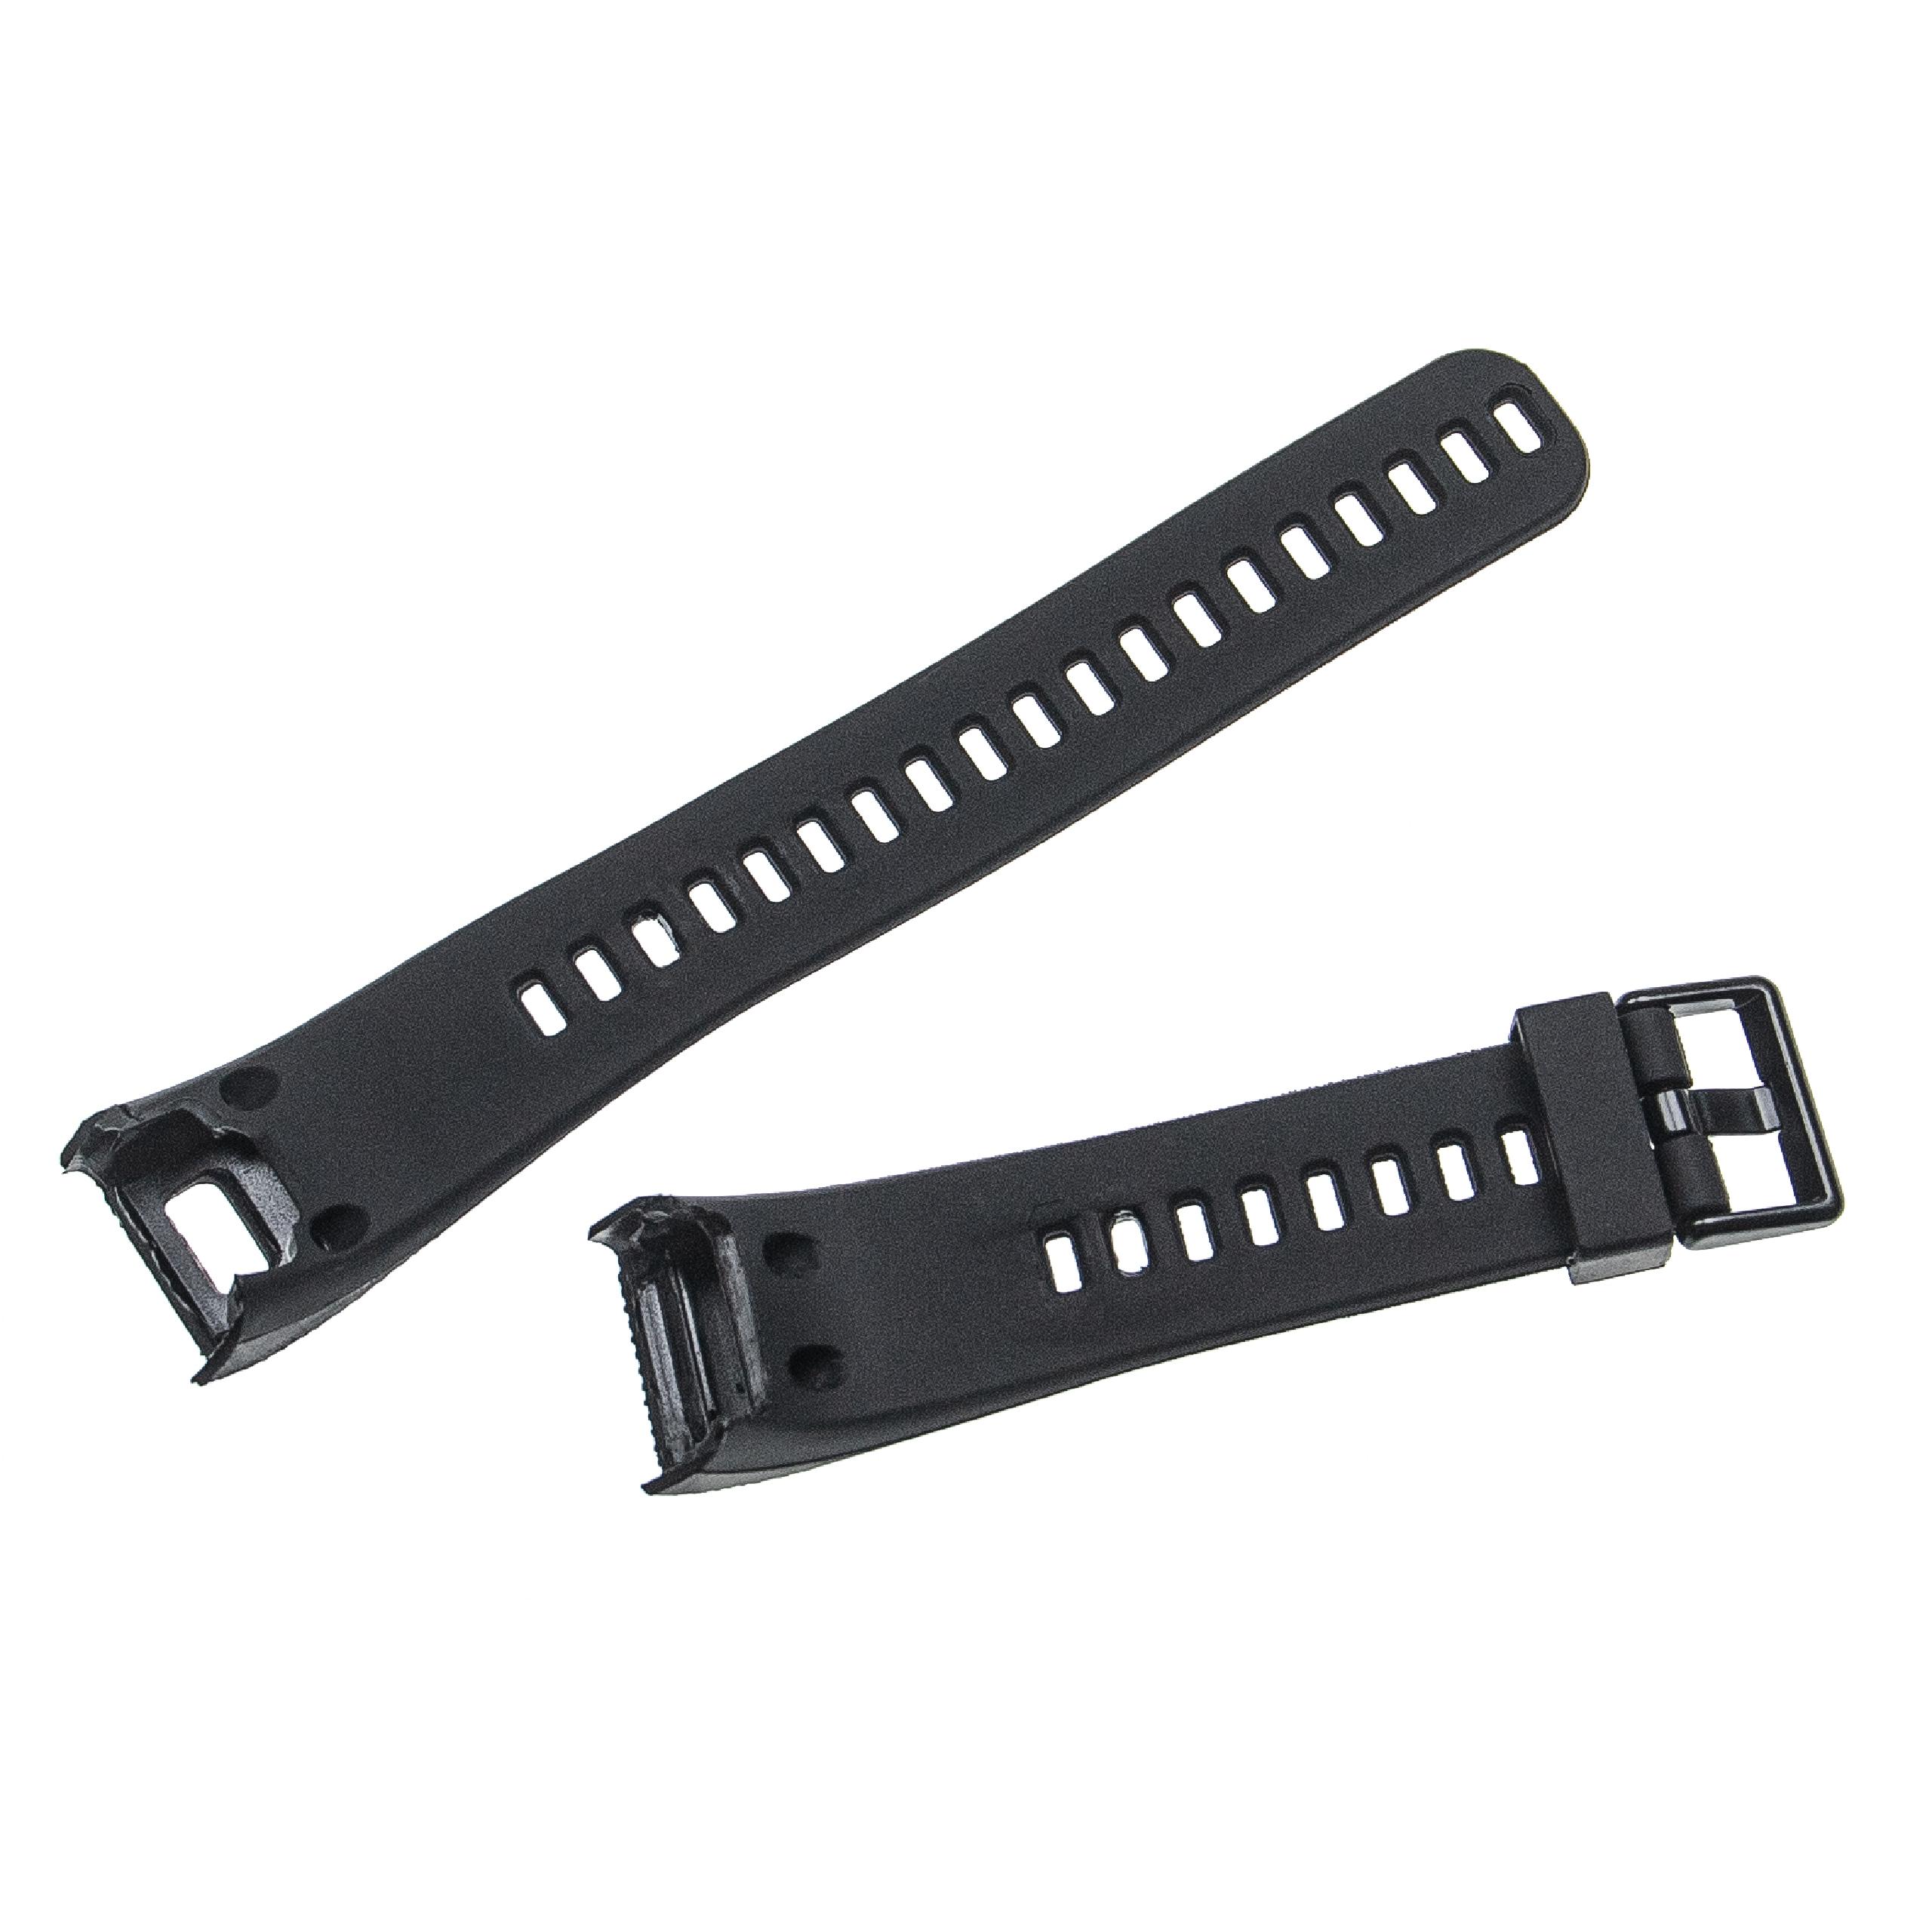 cinturino per Garmin Vivosmart Smartwatch - 12,7 + 8,8 cm lunghezza, 20mm ampiezza, TPU, nero